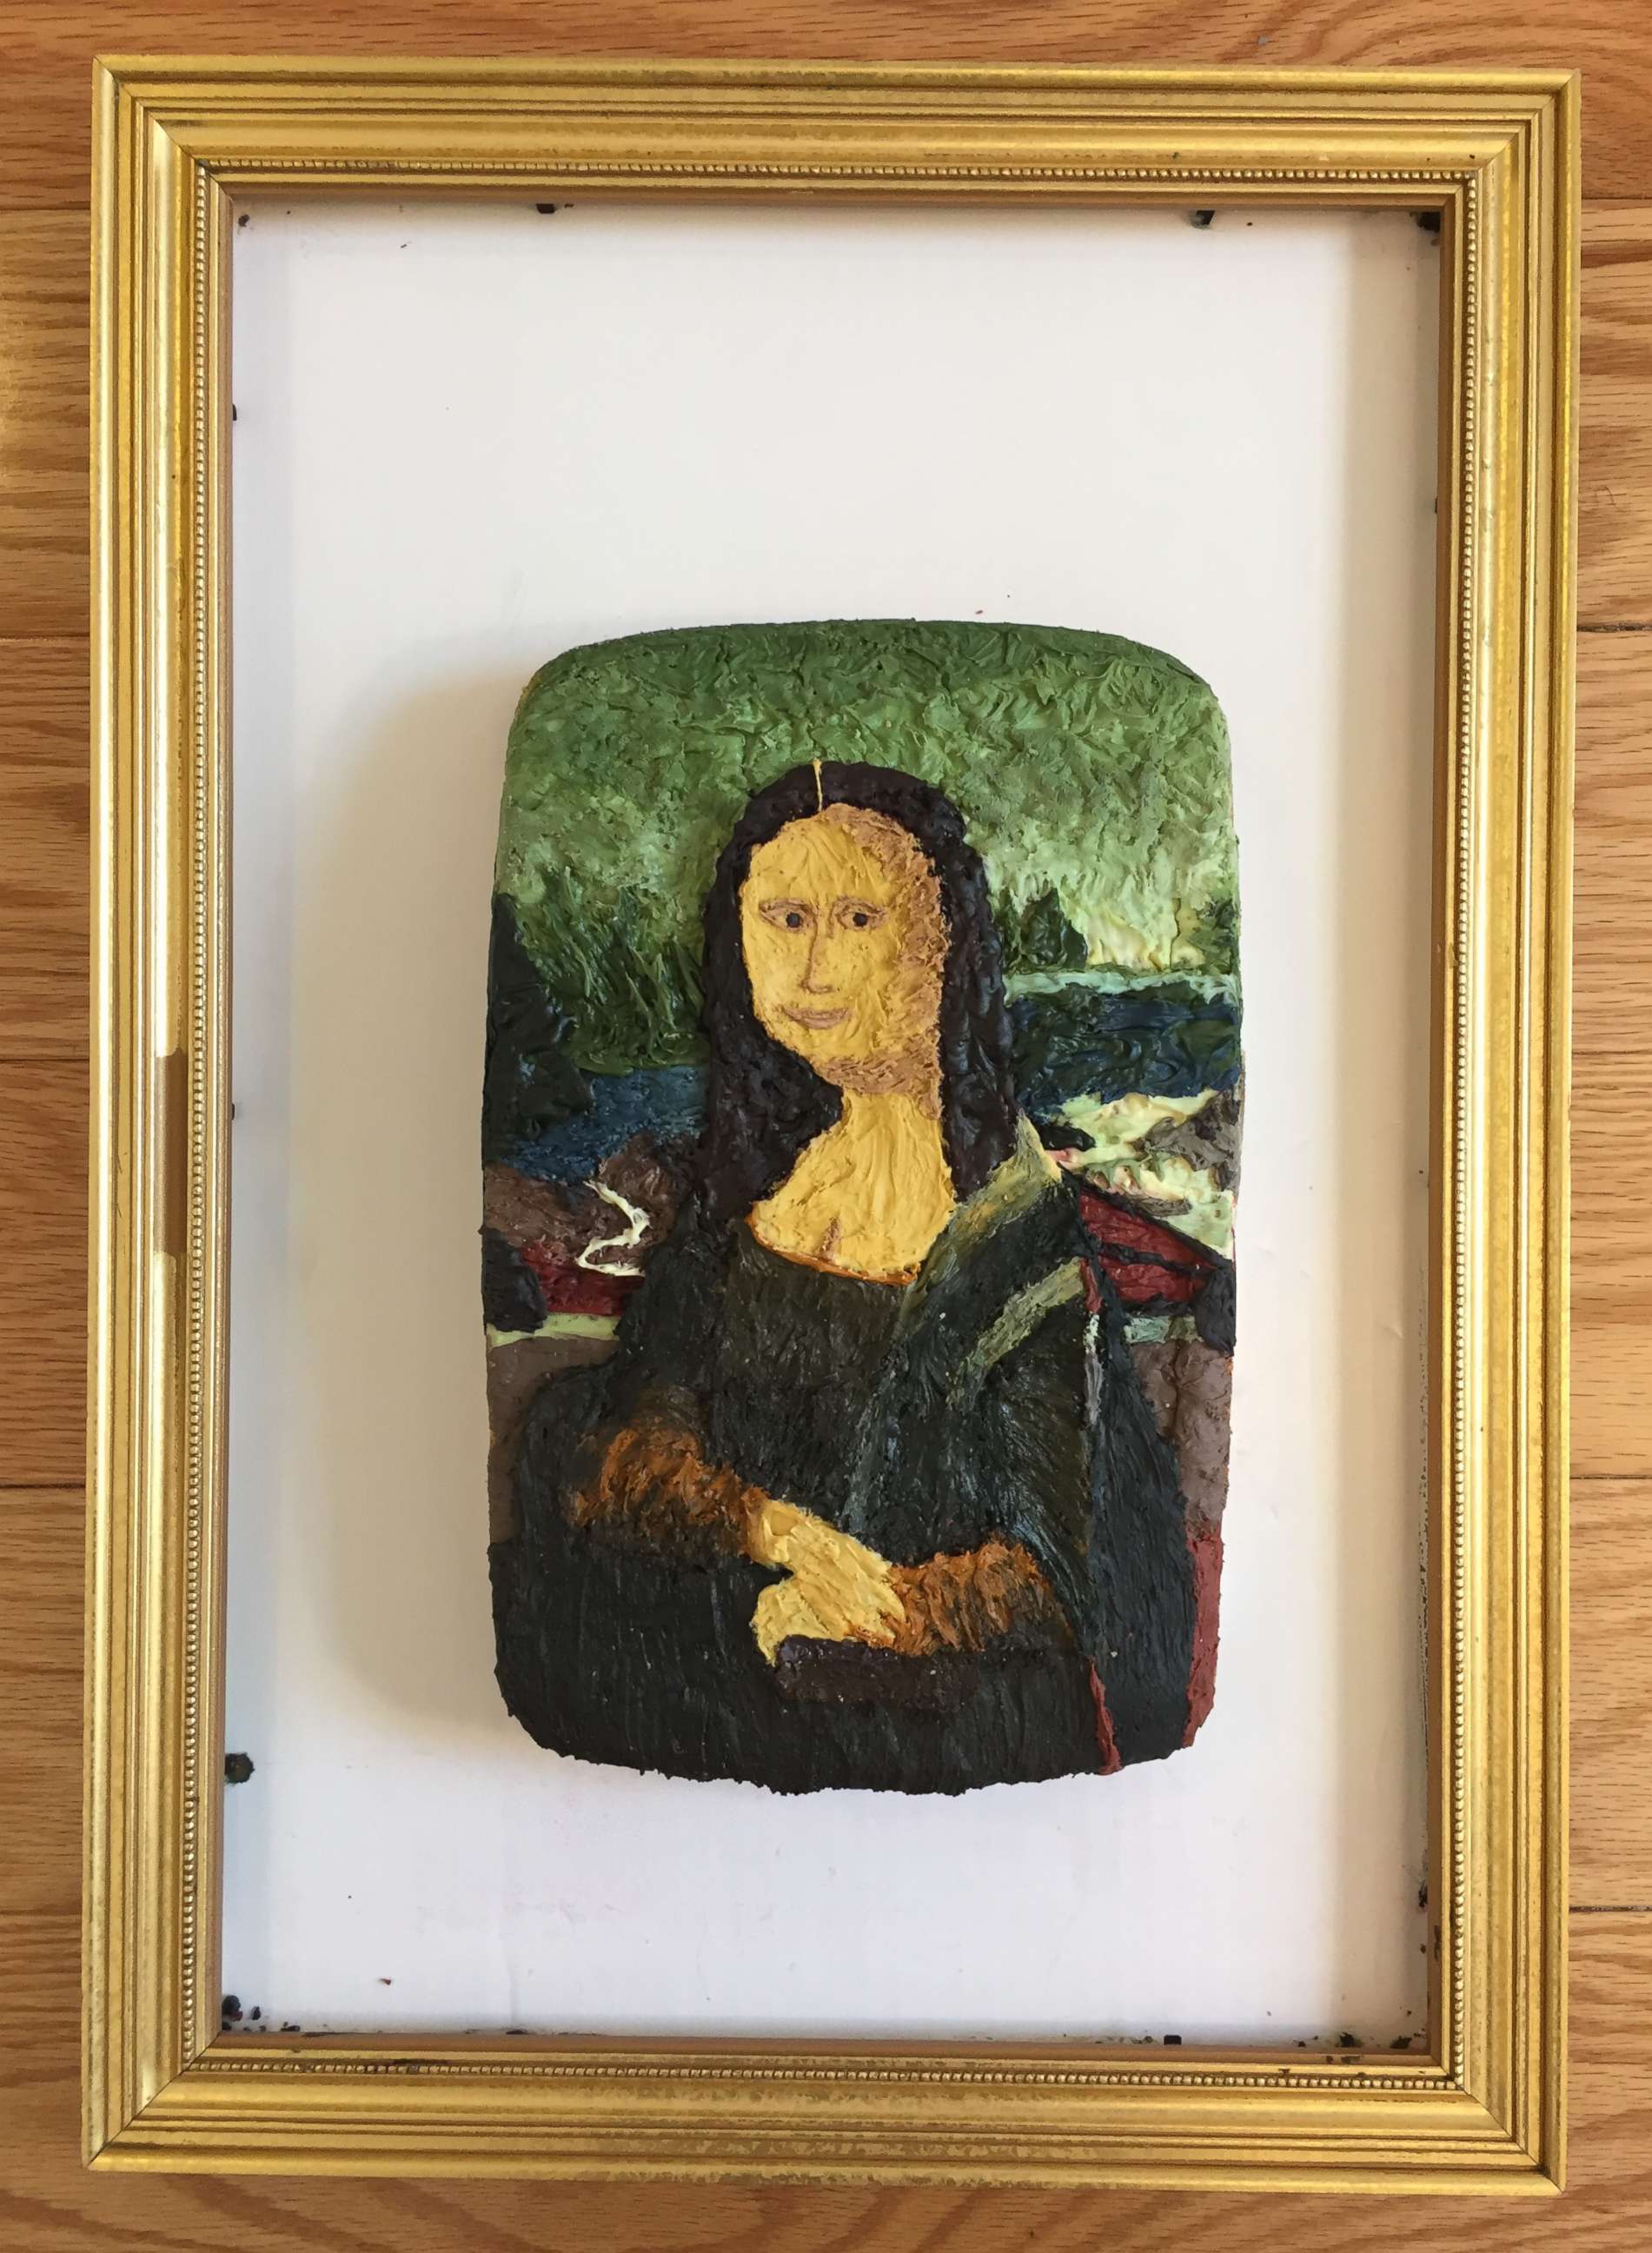 PHOTO: A cake version of Leonardo da Vinci's Mona Lisa.